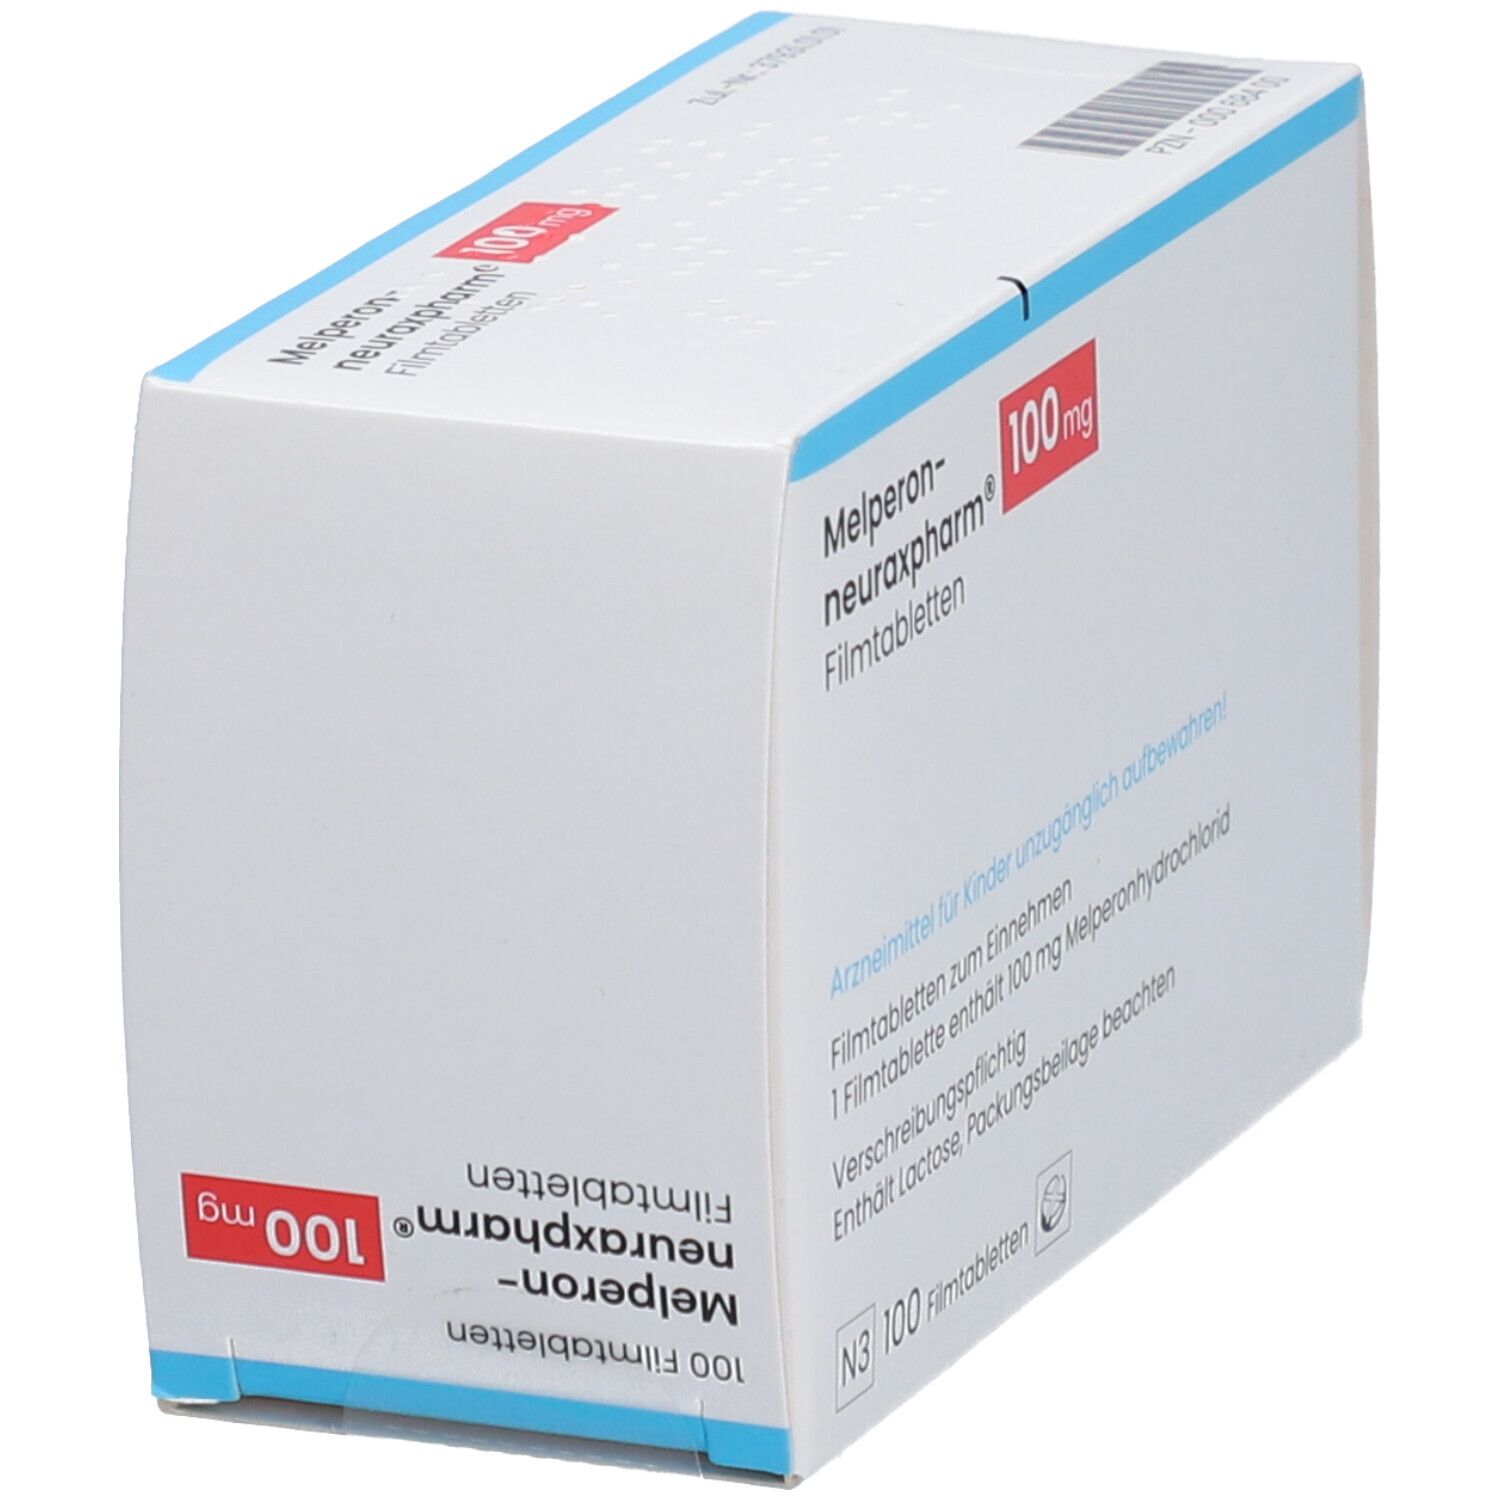 Melperon-neuraxpharm® 100 mg